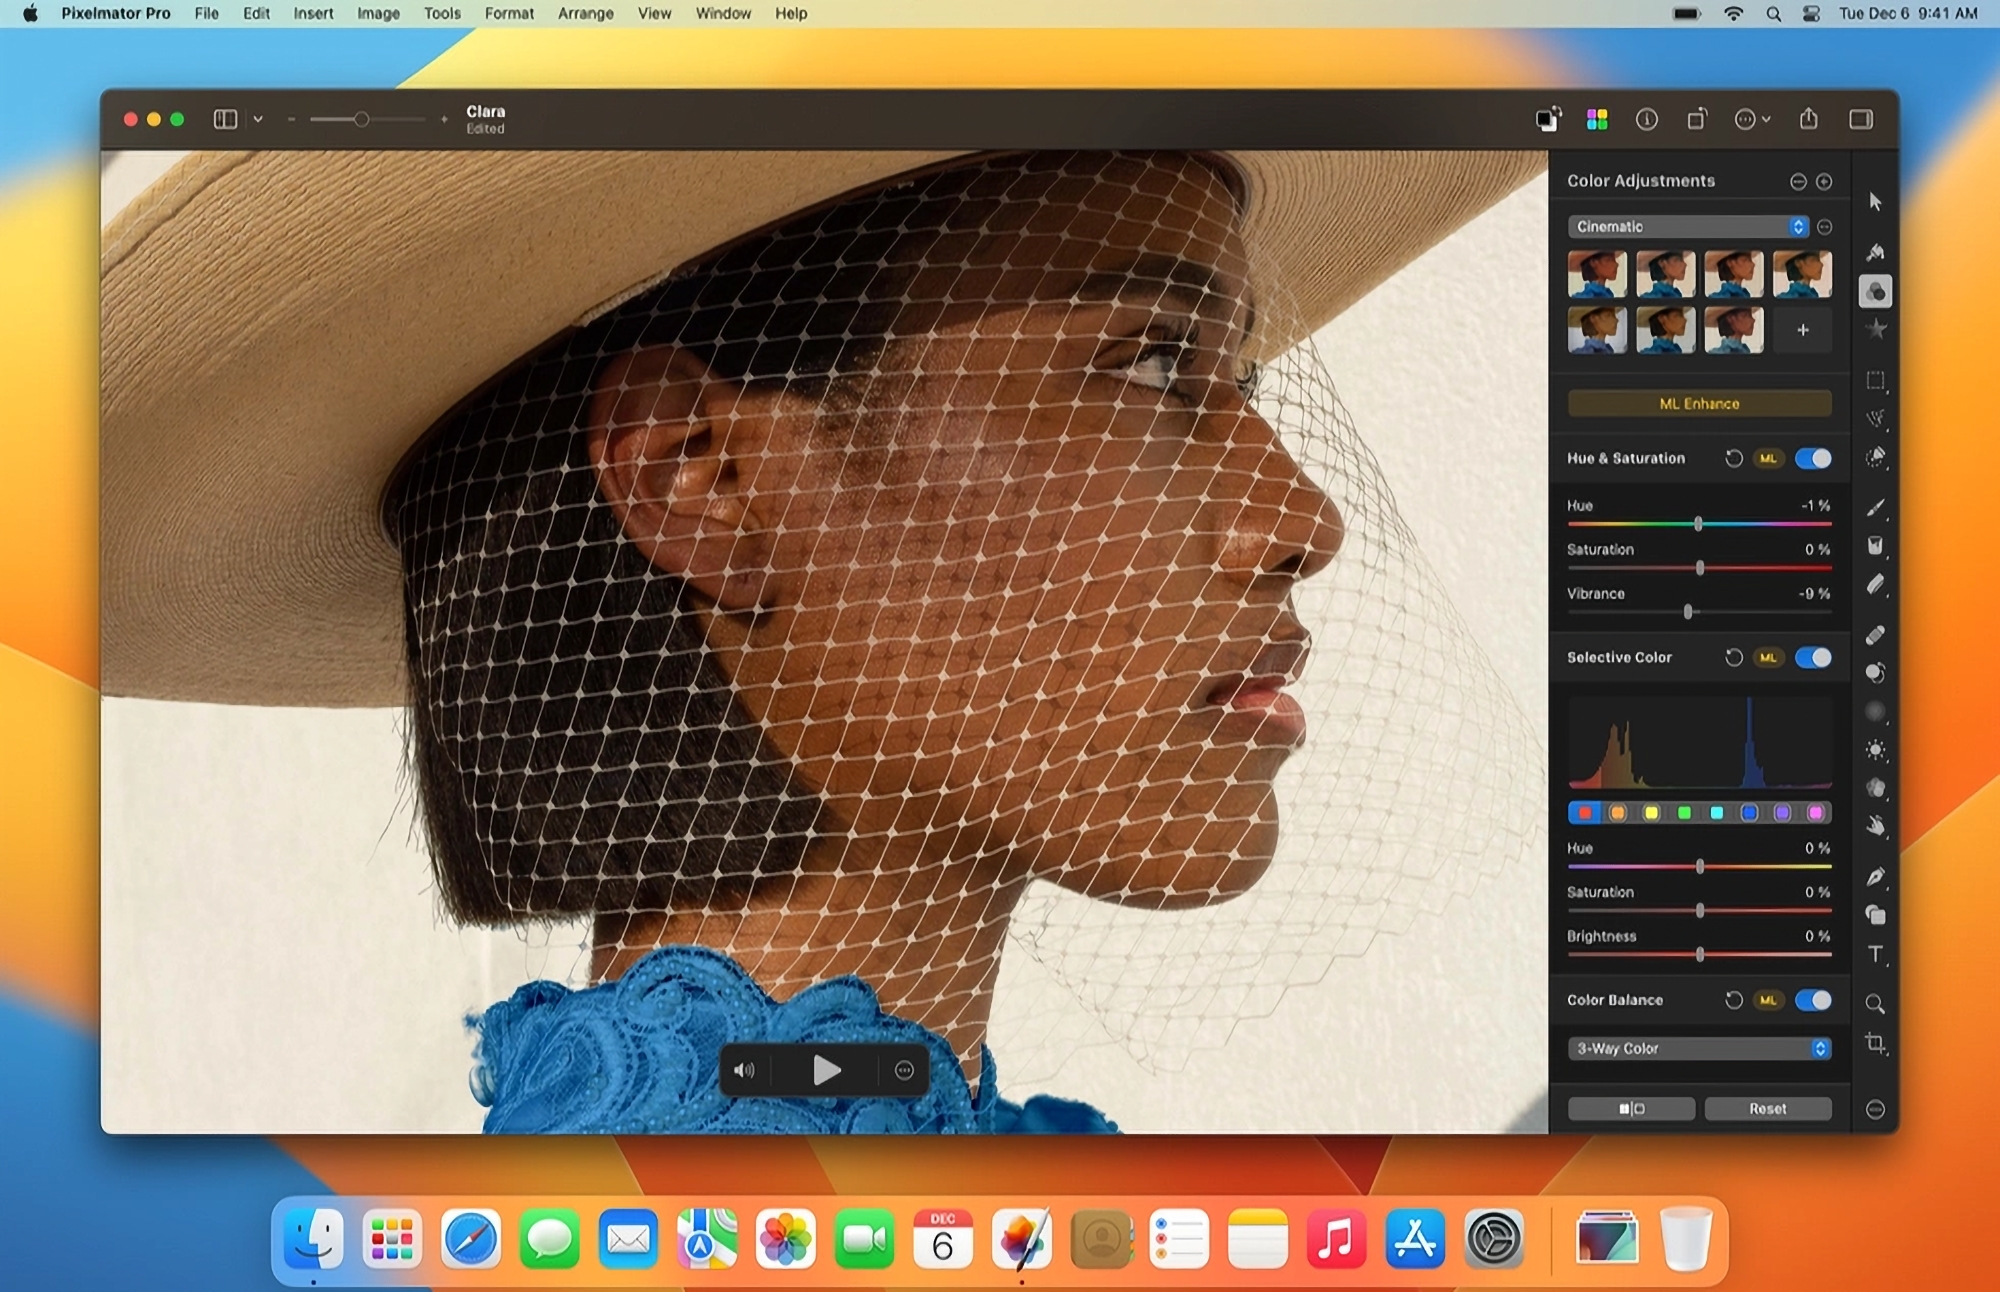 Pixelmator Pro 3.2 Lumiere for Mac got video editing capability